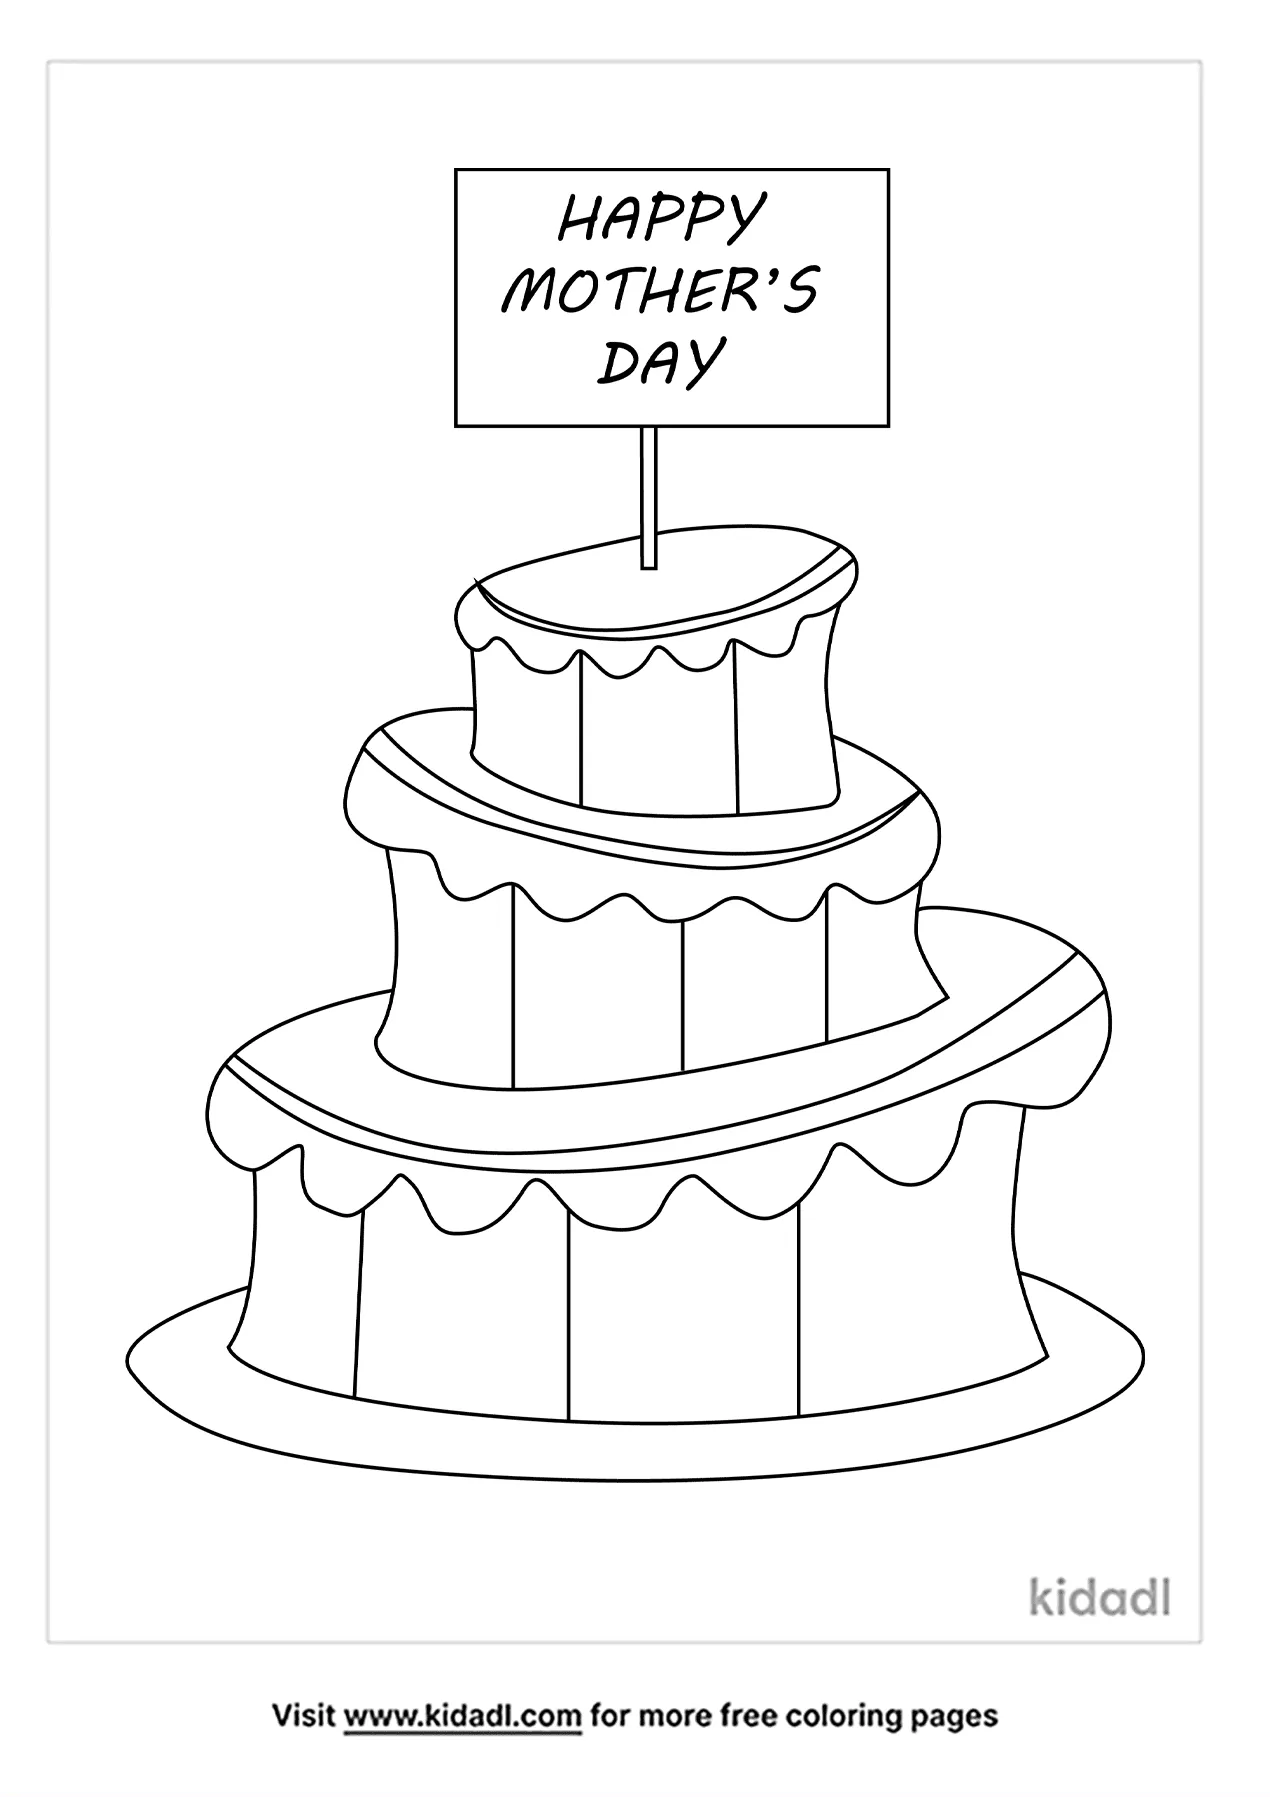 Father's Day Cakes: Creative & Delicious Ideas